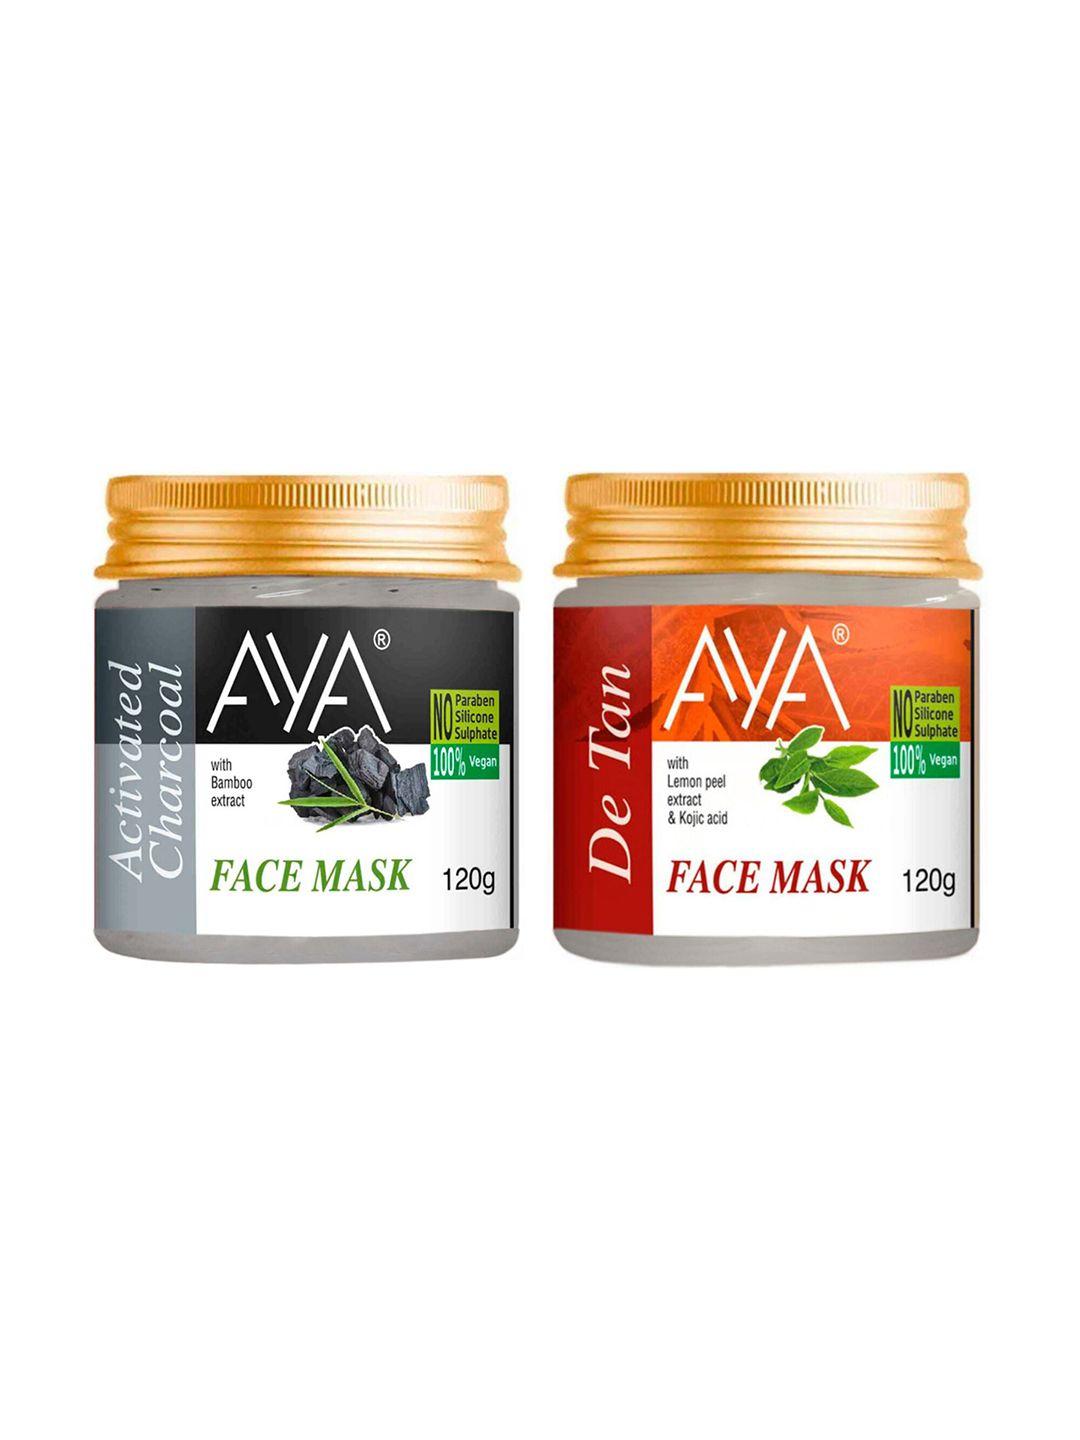 aya set of activated charcoal & de tan no paraben face mask - 120 g each